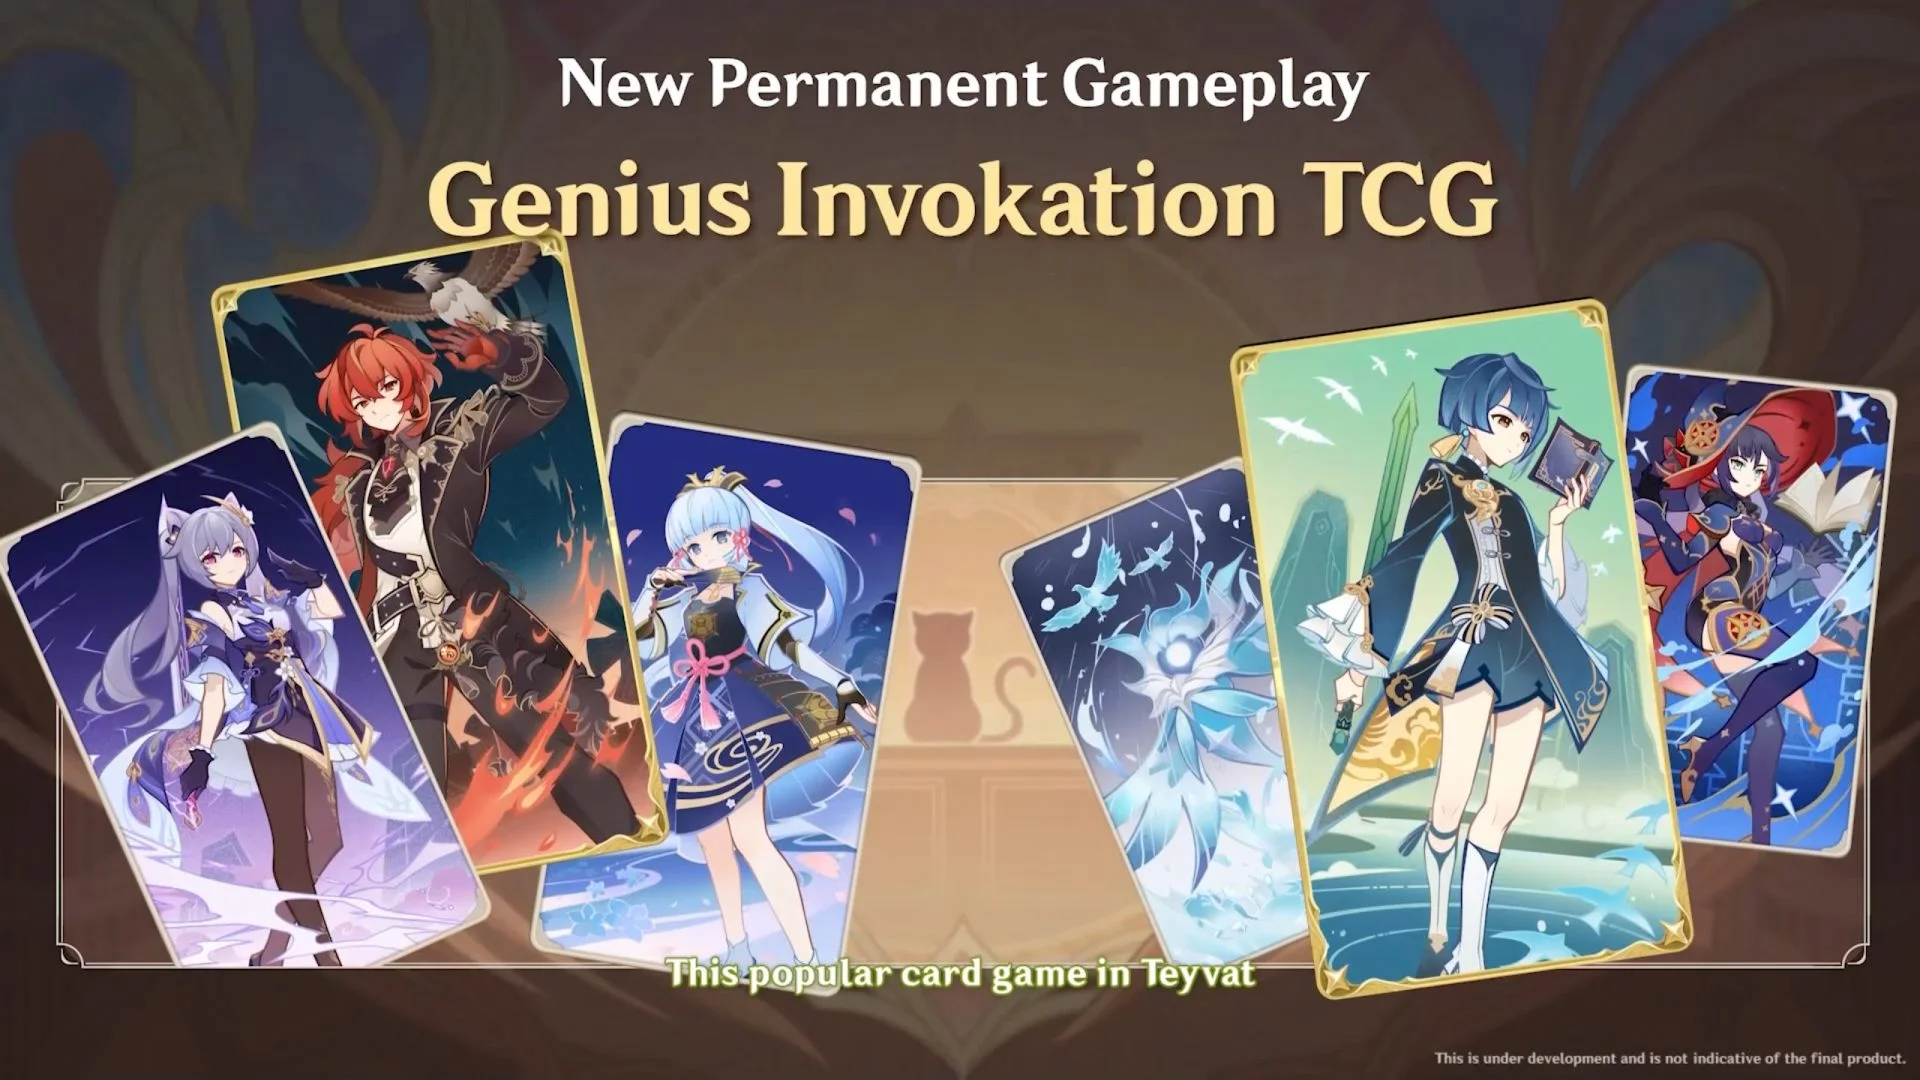 Genius Invocation Trading Card Game, Genius Invocation TCG, Genshin Impact,